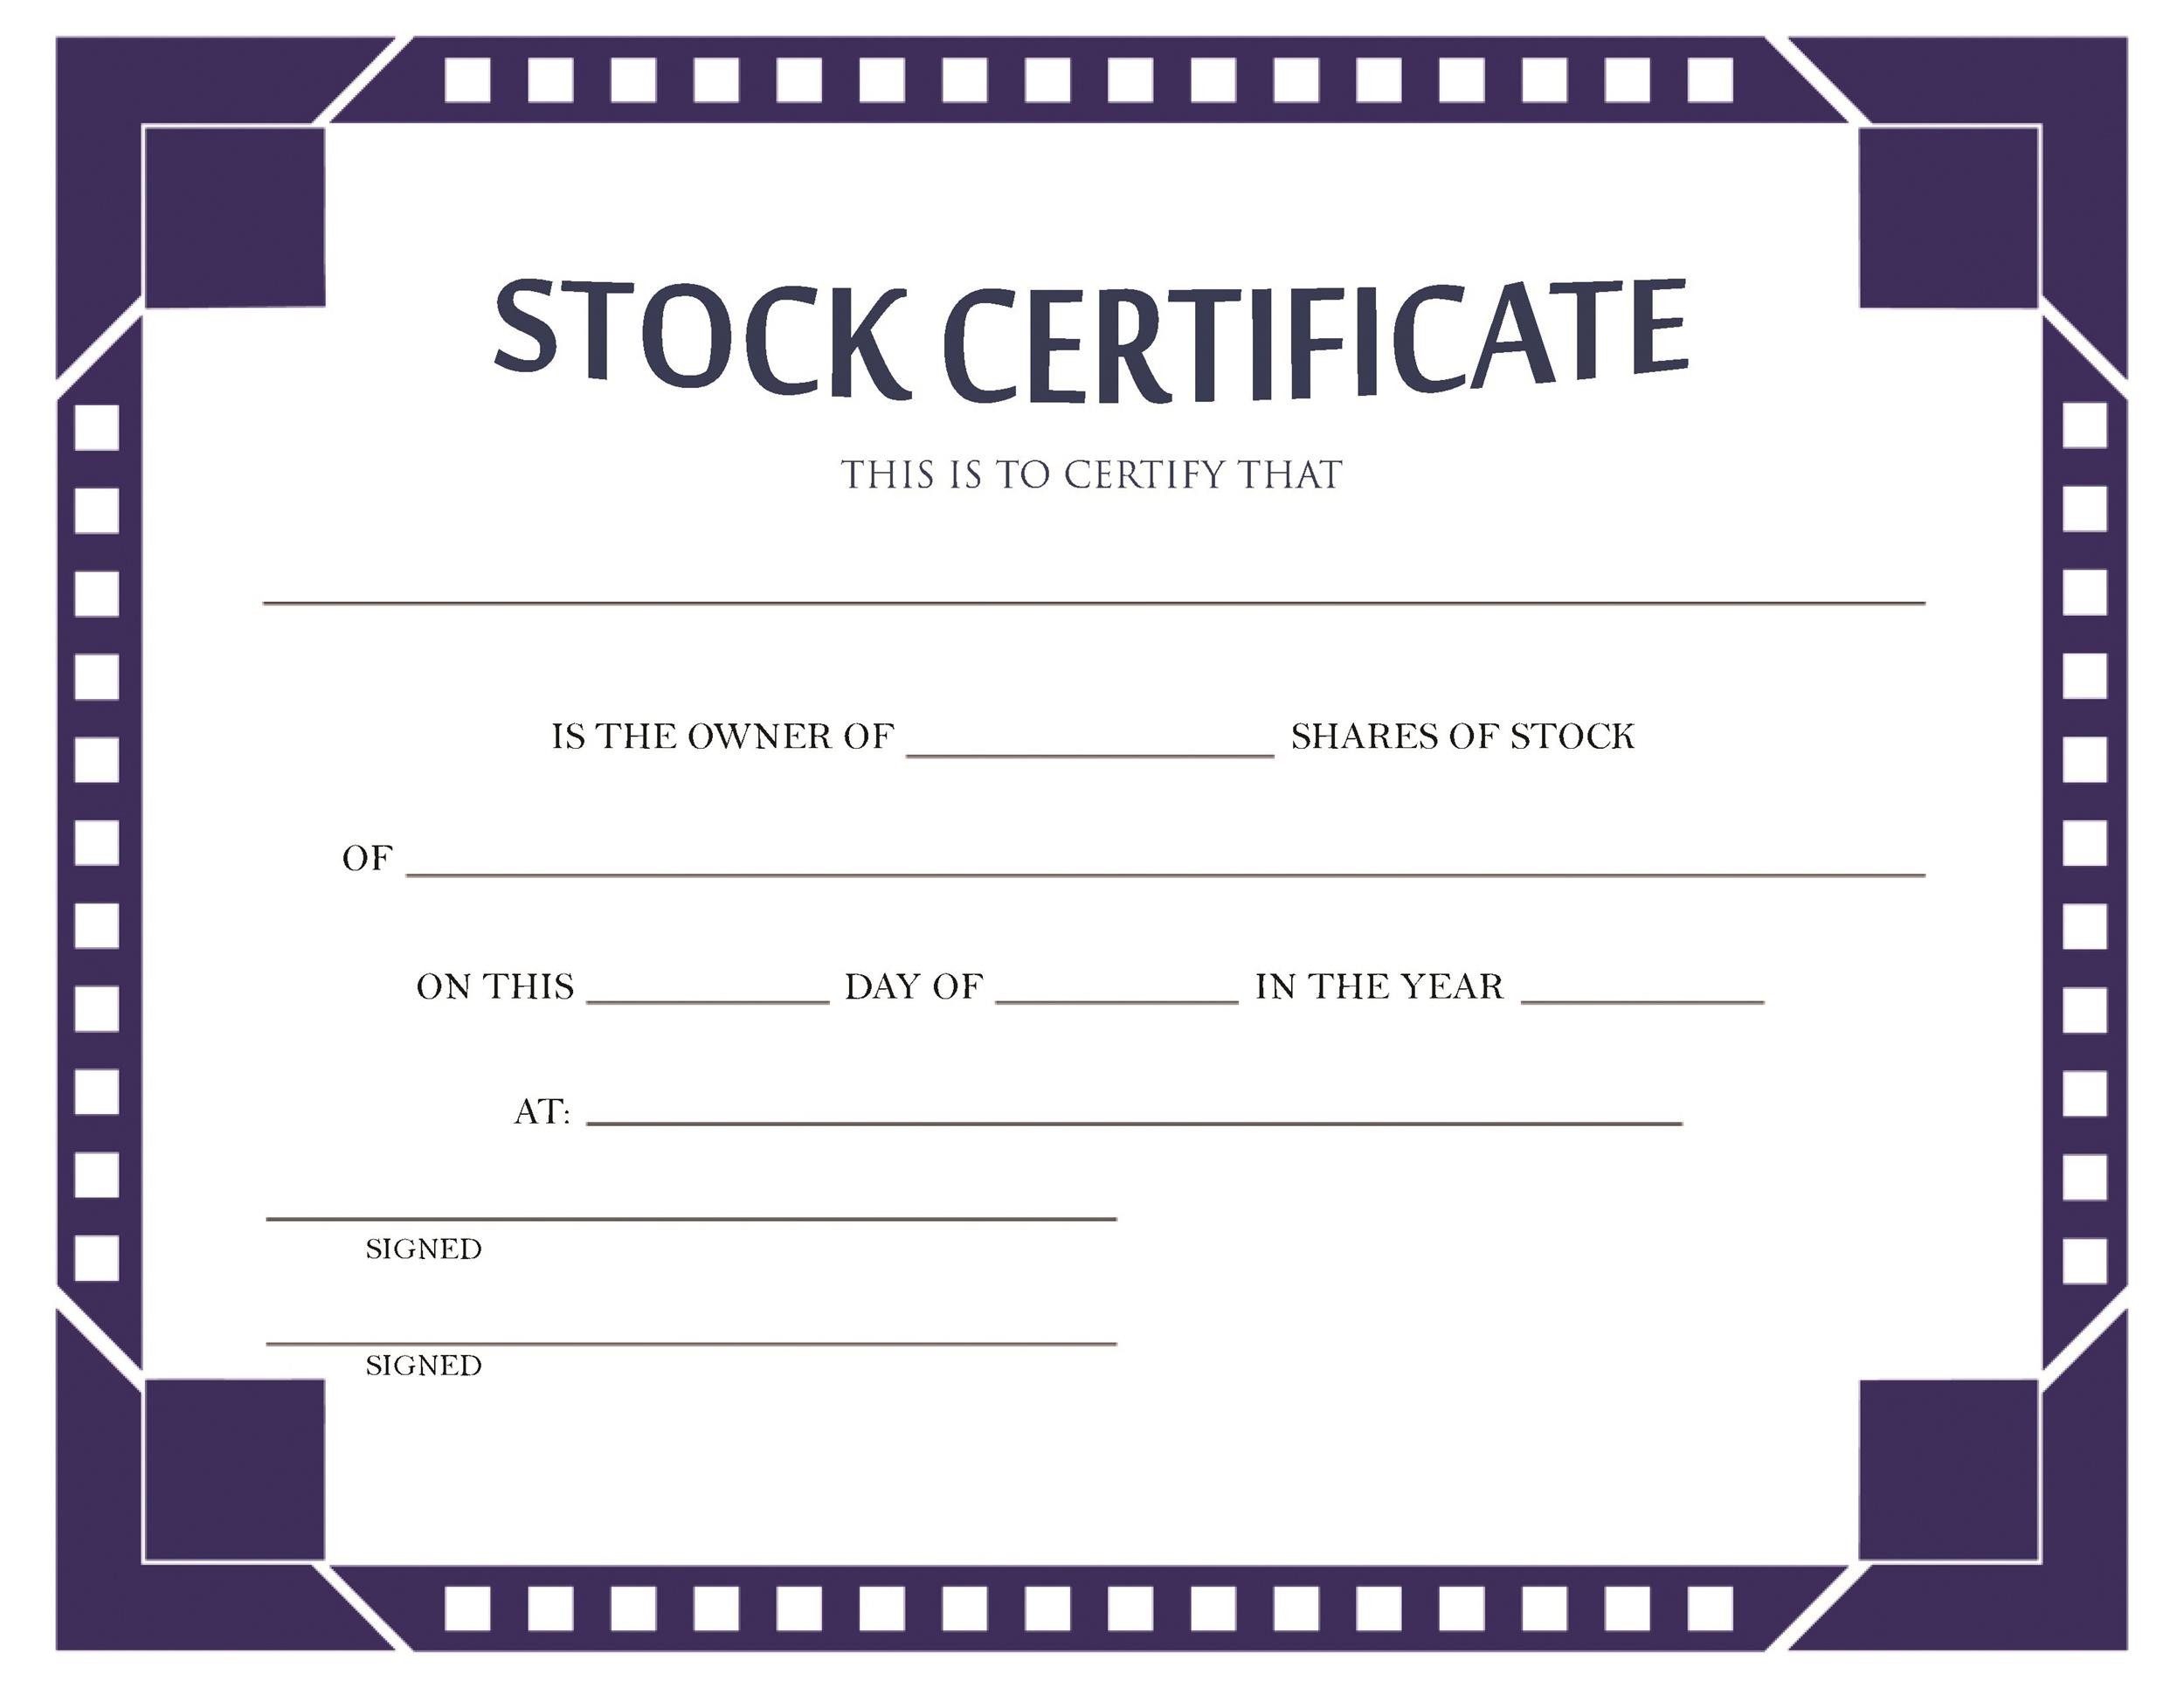 40+ Free Stock Certificate Templates (Word, PDF) ᐅ TemplateLab